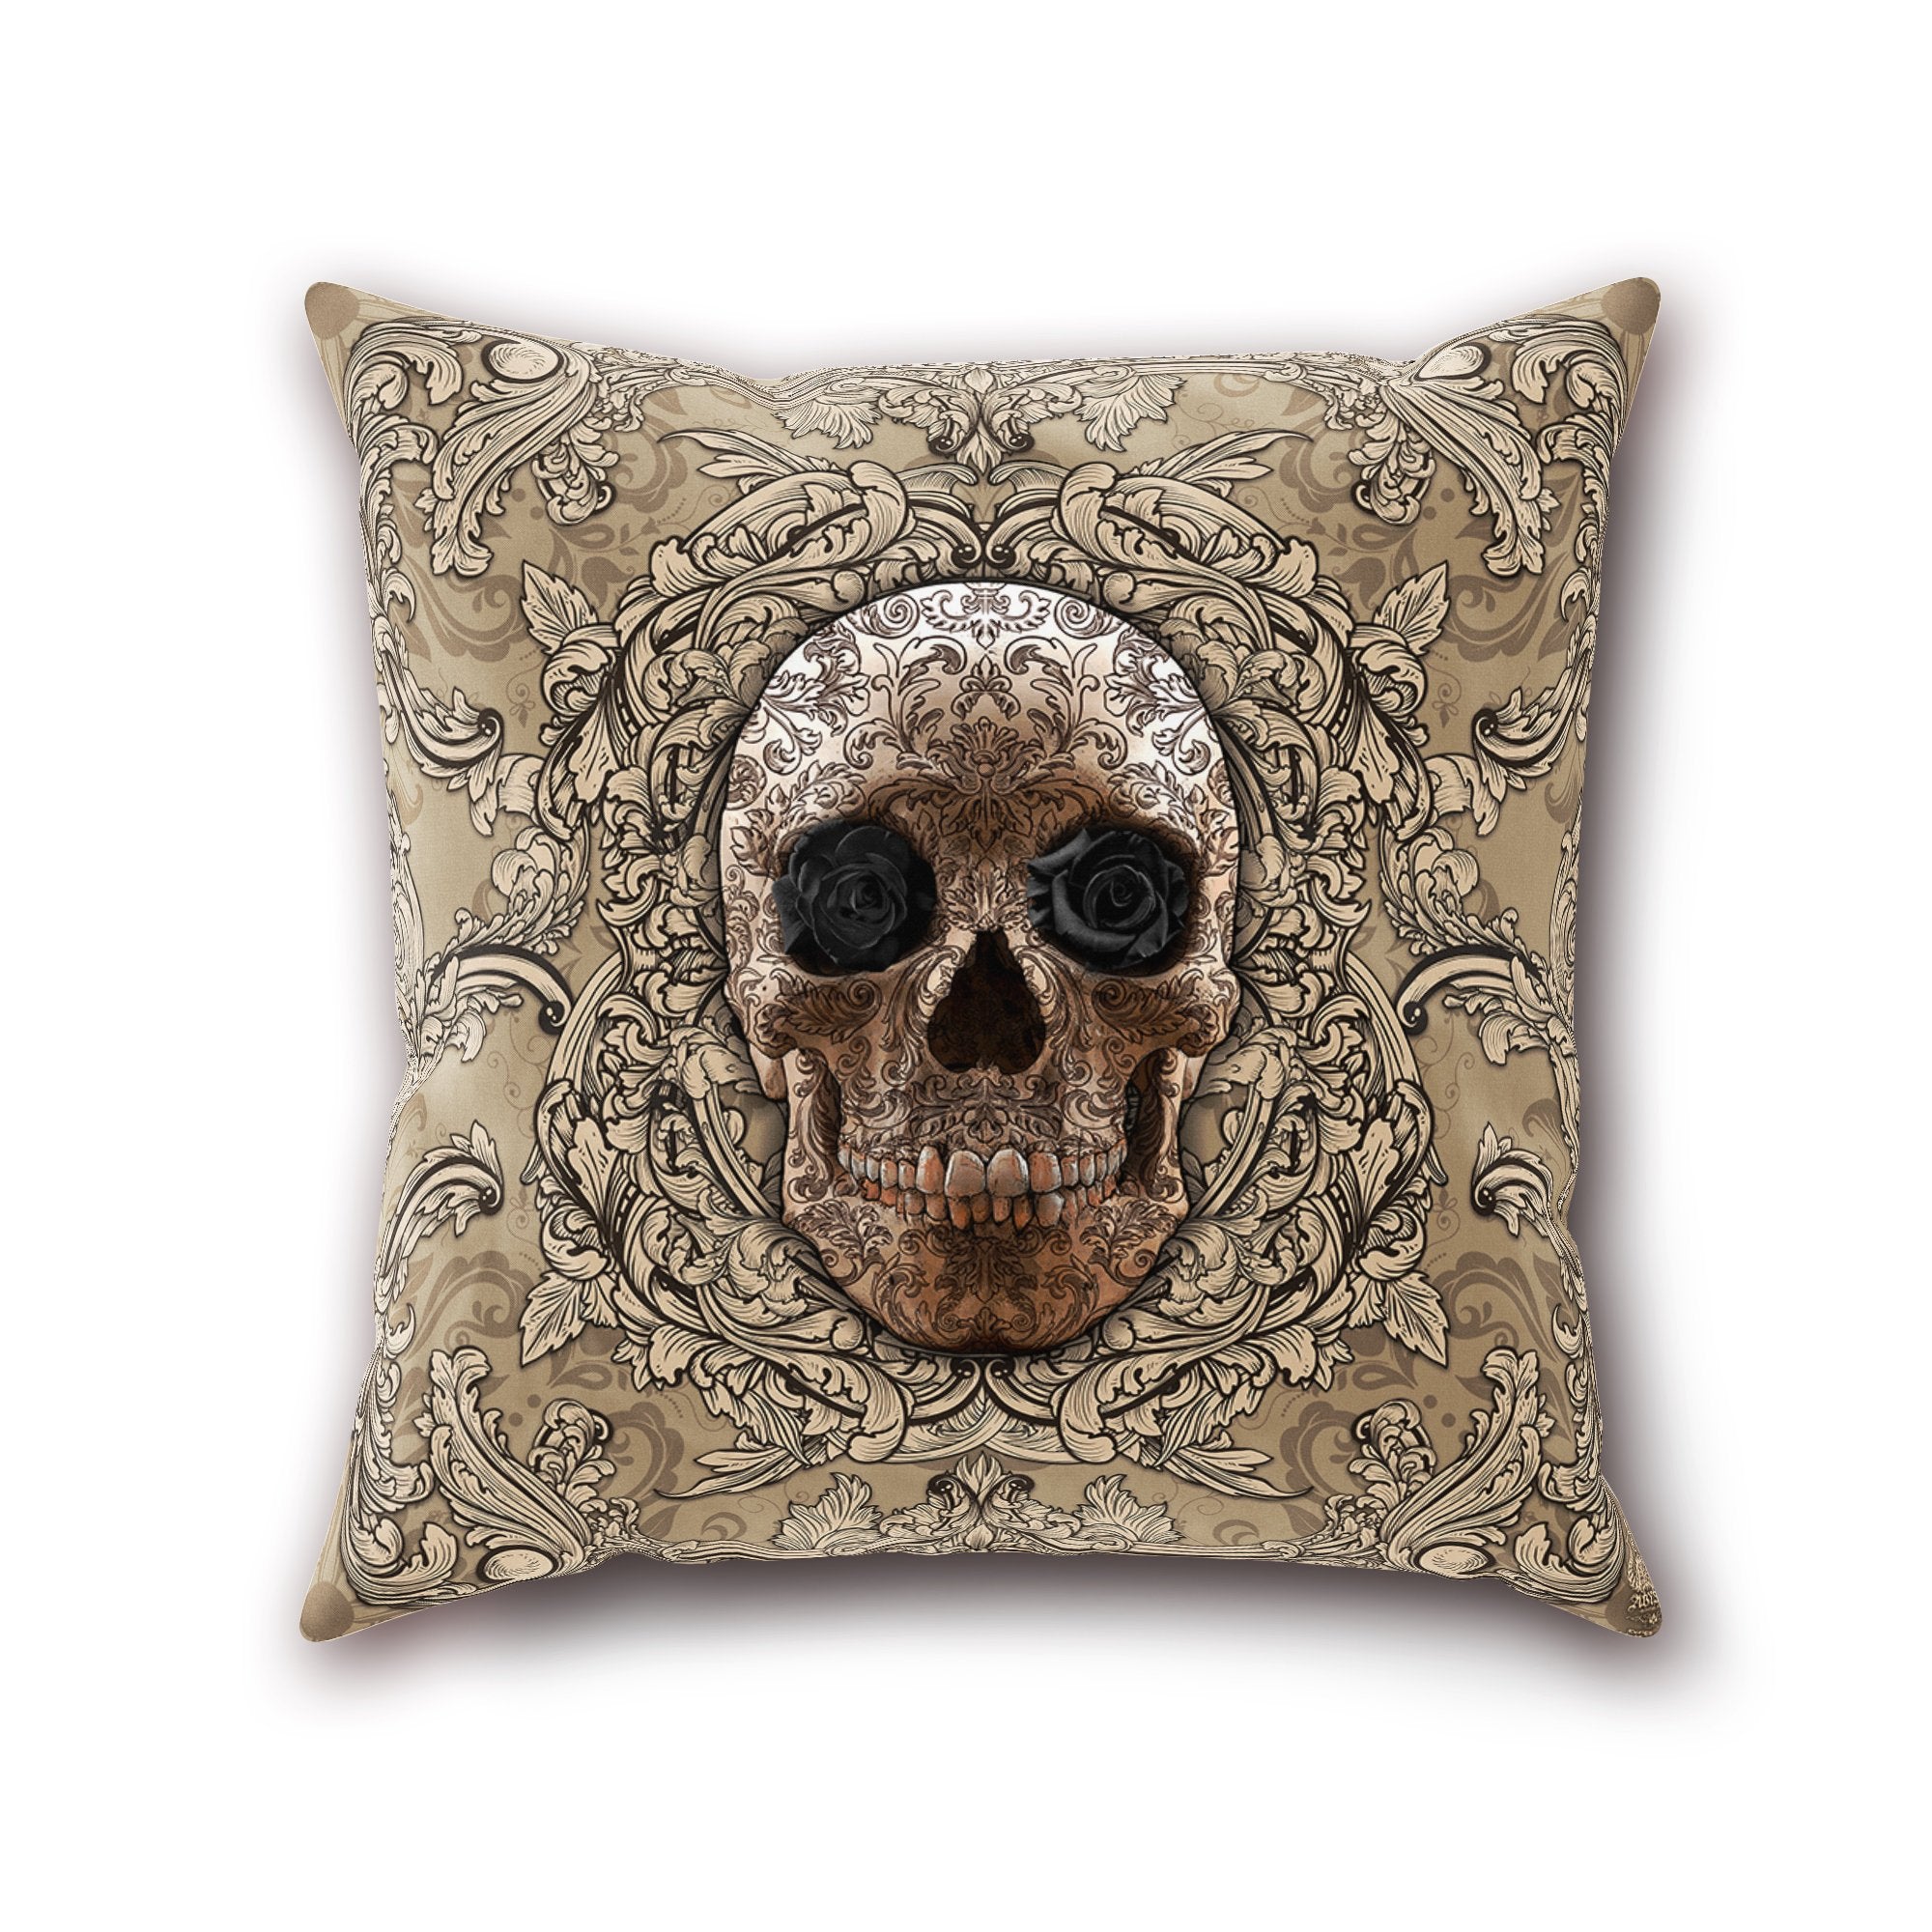 Skull Throw Pillow, Decorative Accent Cushion, Goth Room Decor, Macabre Art, Alternative Home - Cream - Abysm Internal